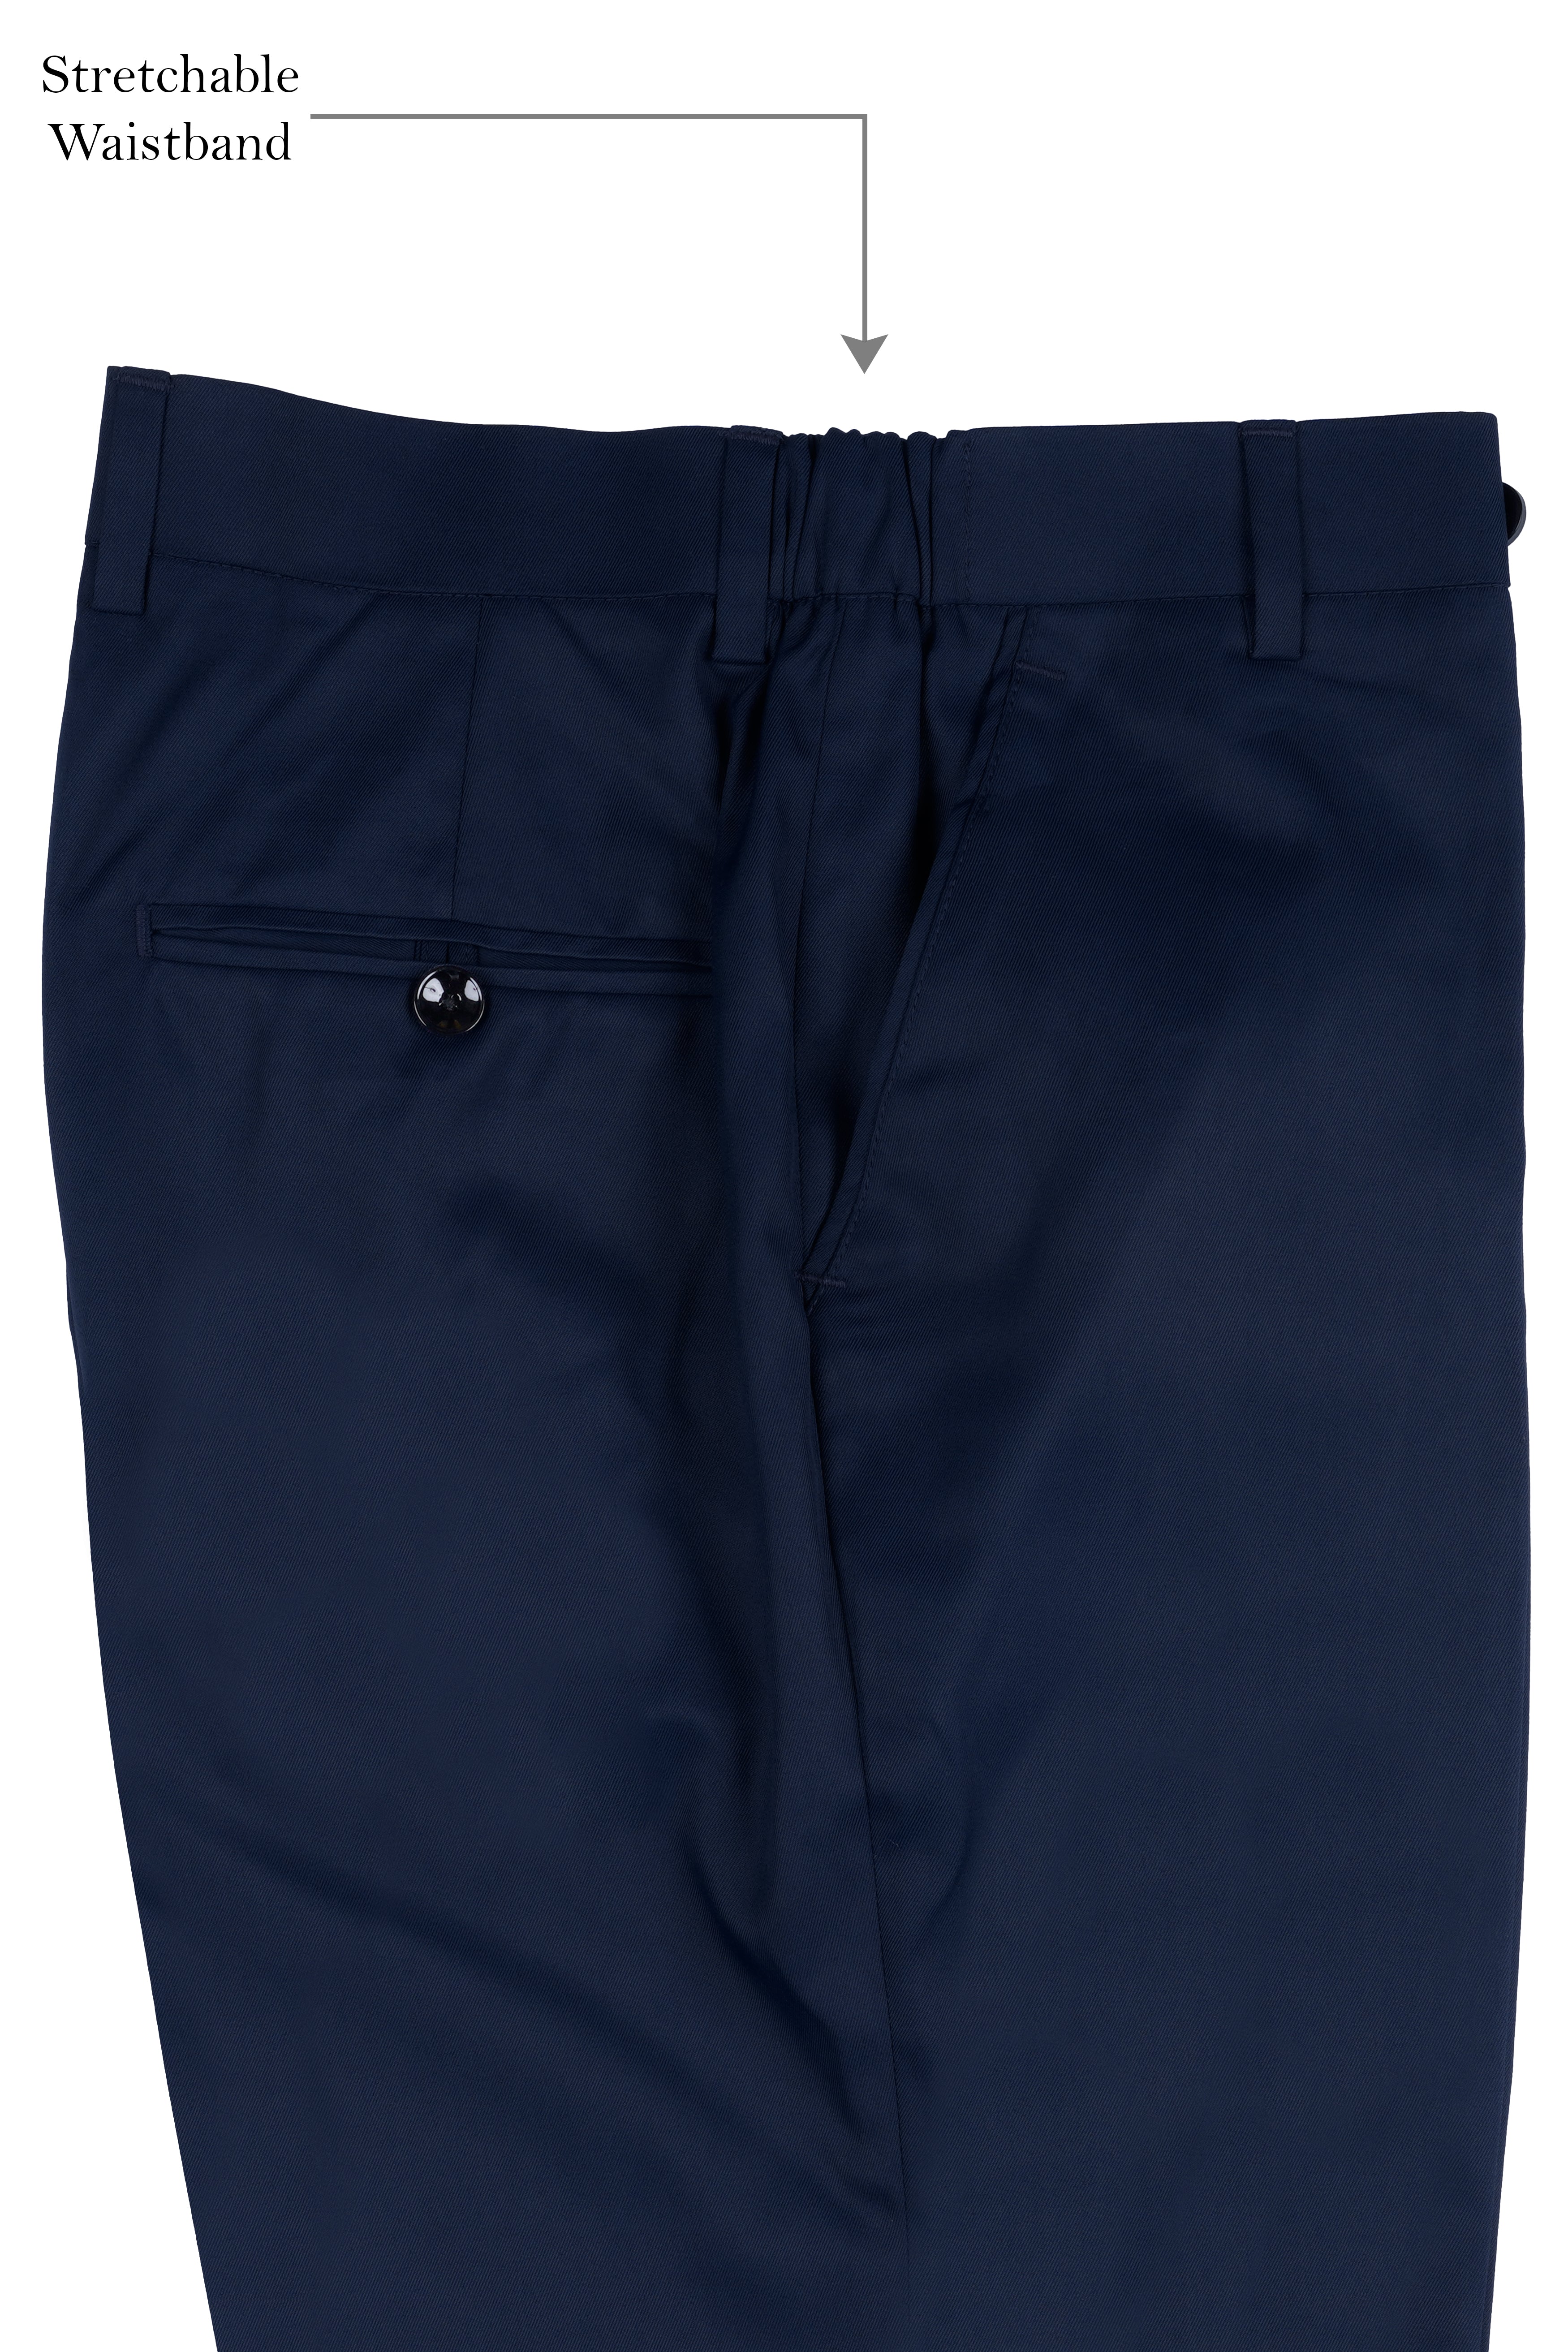 Slit Polos Cadet Blue Half Sleeve Polo T-shirt For Men's – Menology Clothing